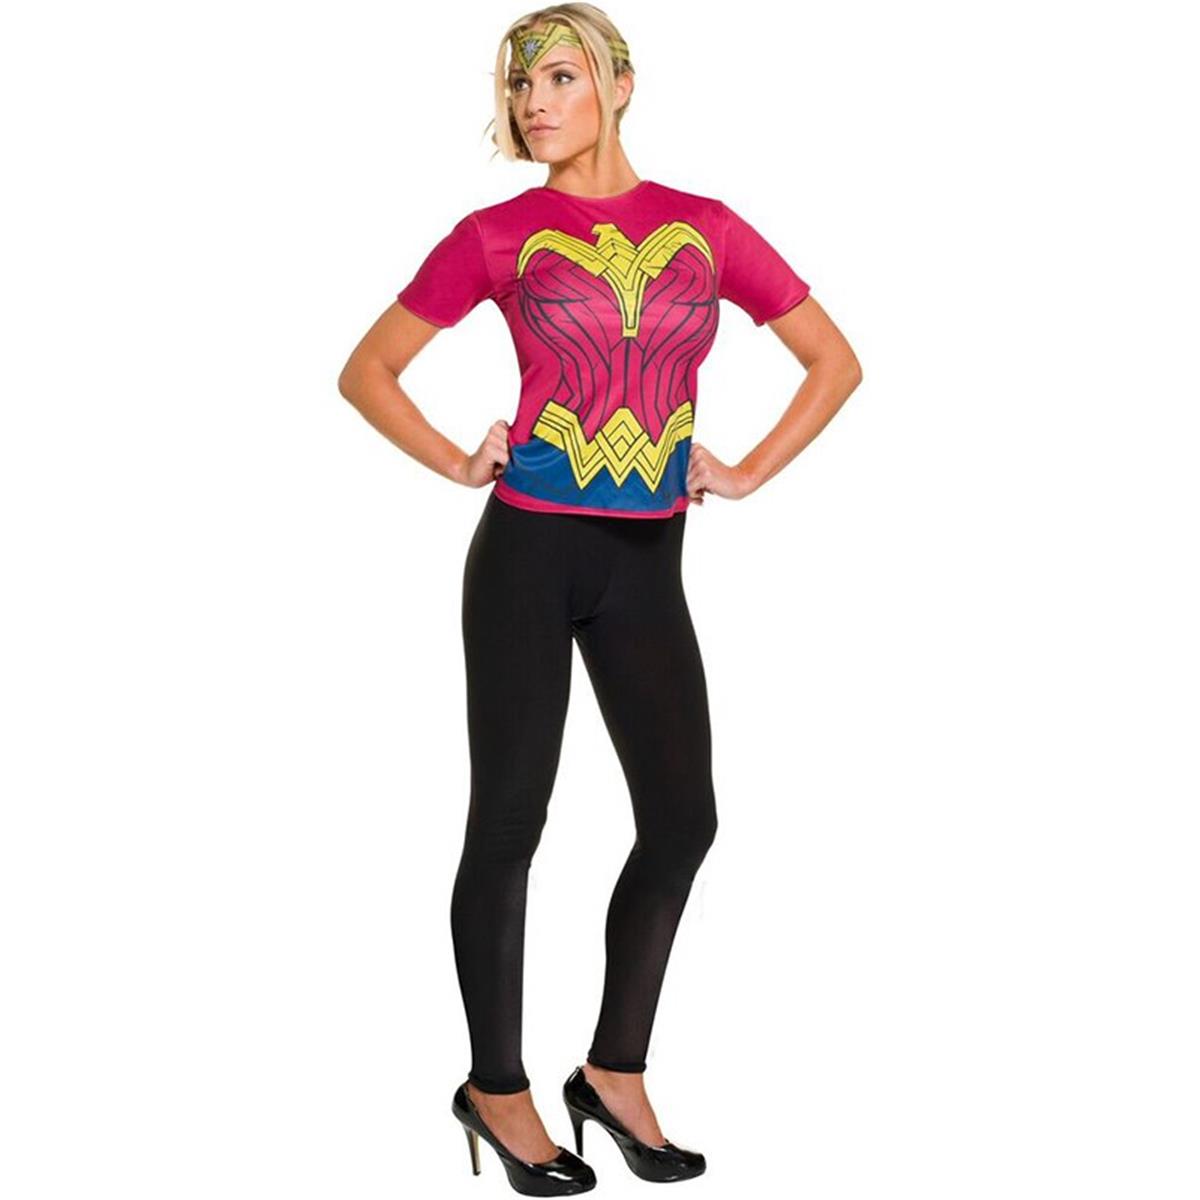 285065 Wonder Woman Adult Costume Top, Large